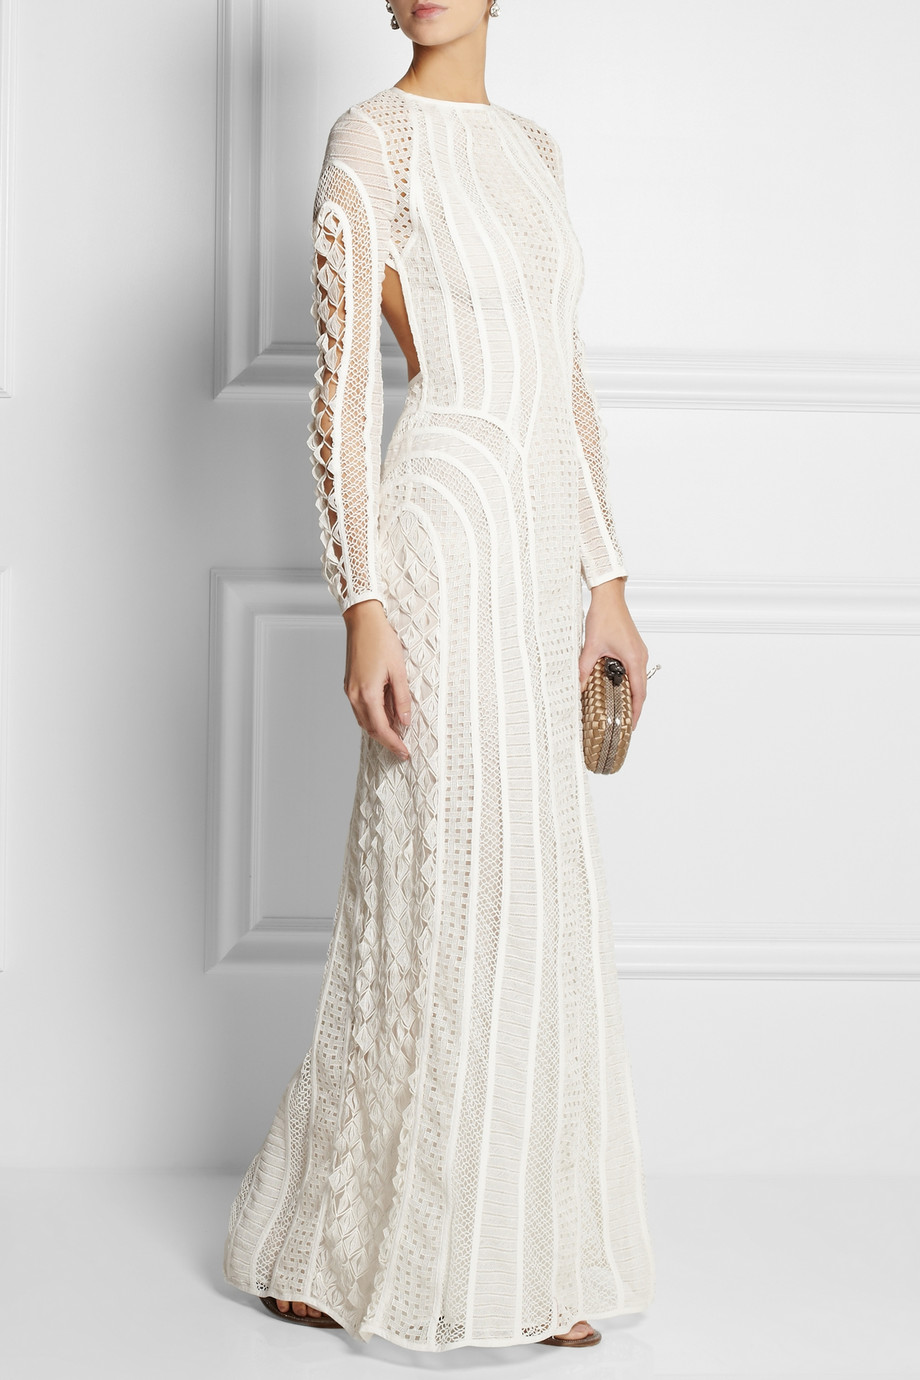 Lyst - Zimmermann Good Love Crocheted Lace Maxi Dress in White